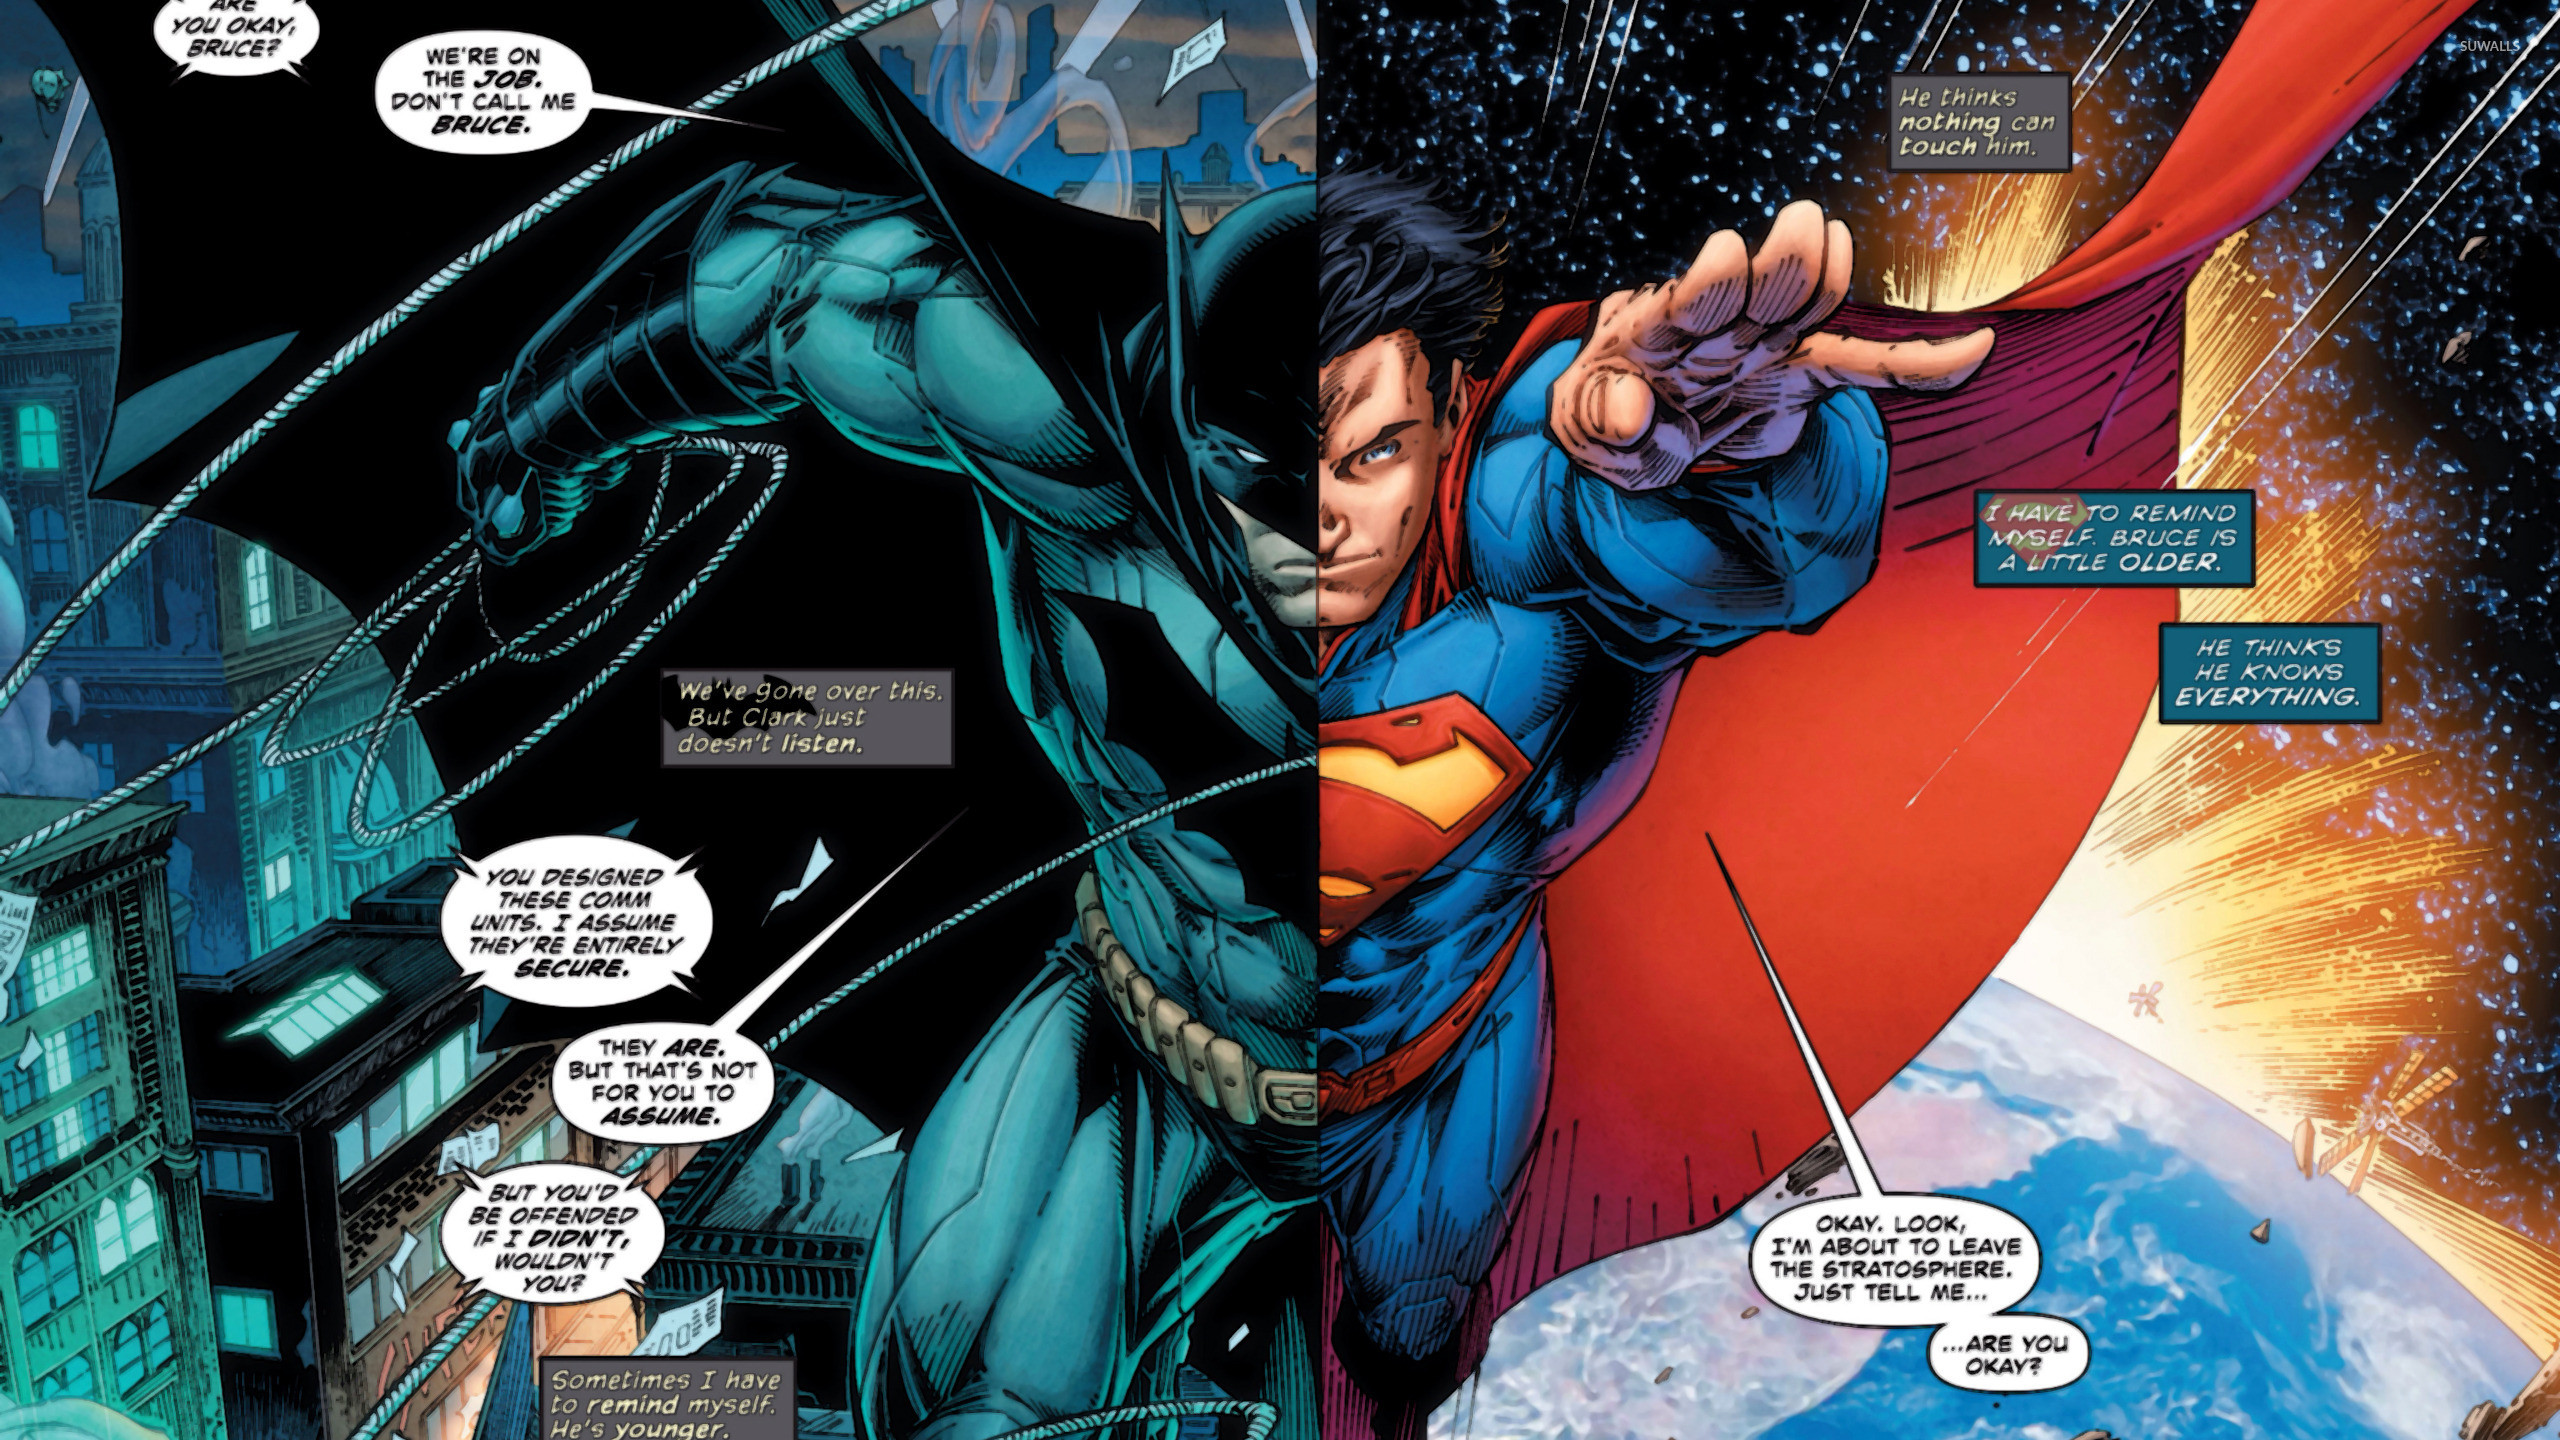 Superman Vs Batman 4k Art HD Superheroes 4k Wallpapers Images  Backgrounds Photos and Pictures